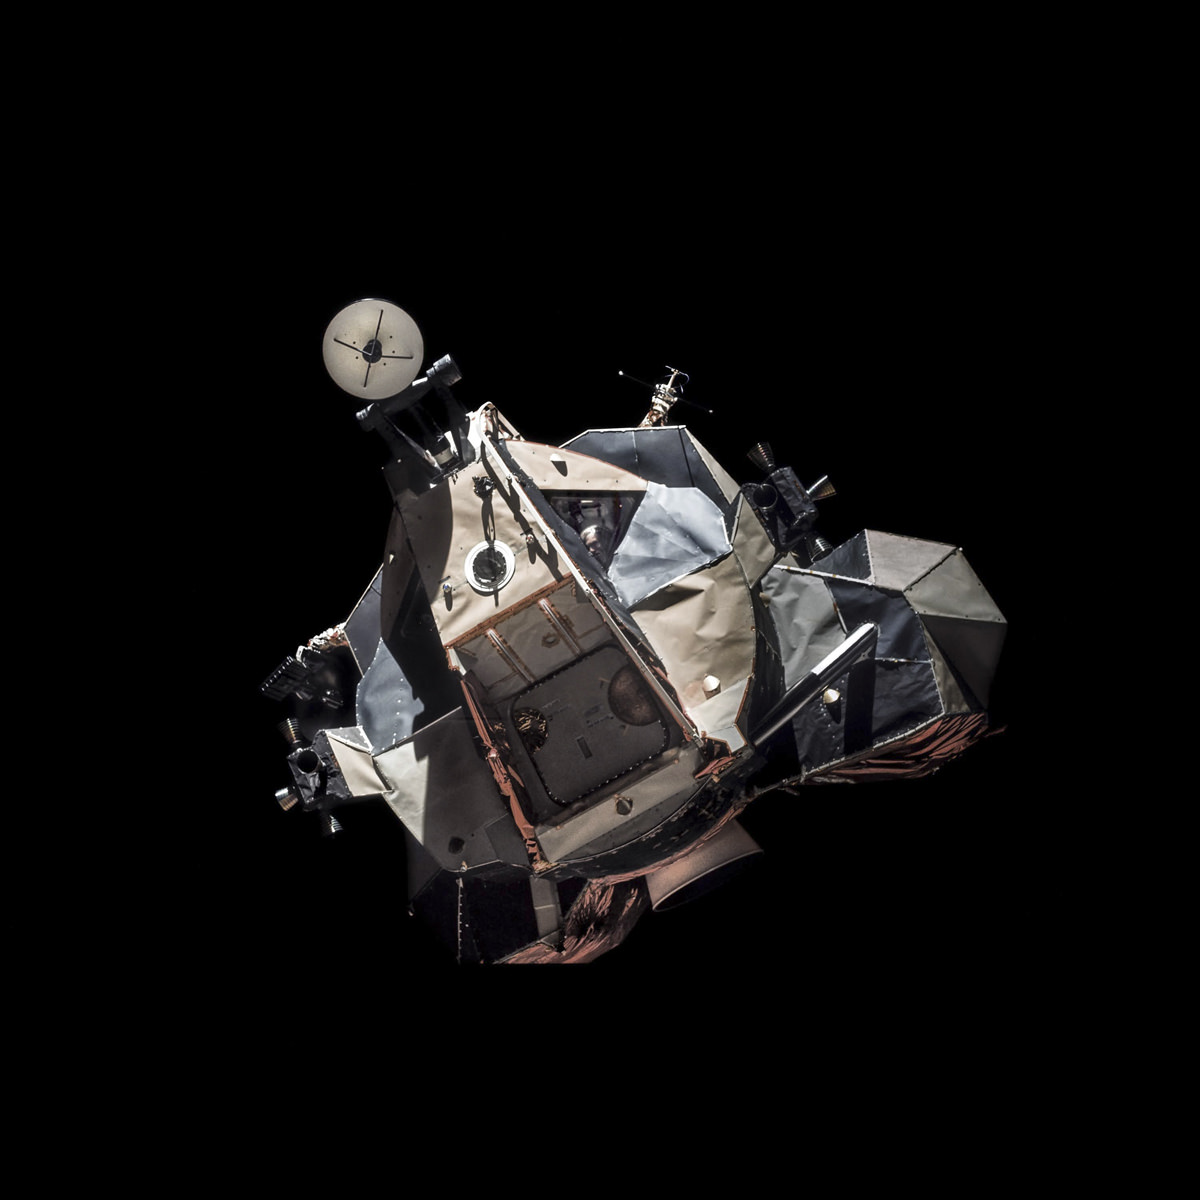 Apollo 17 lunar module flying in the lunar orbit